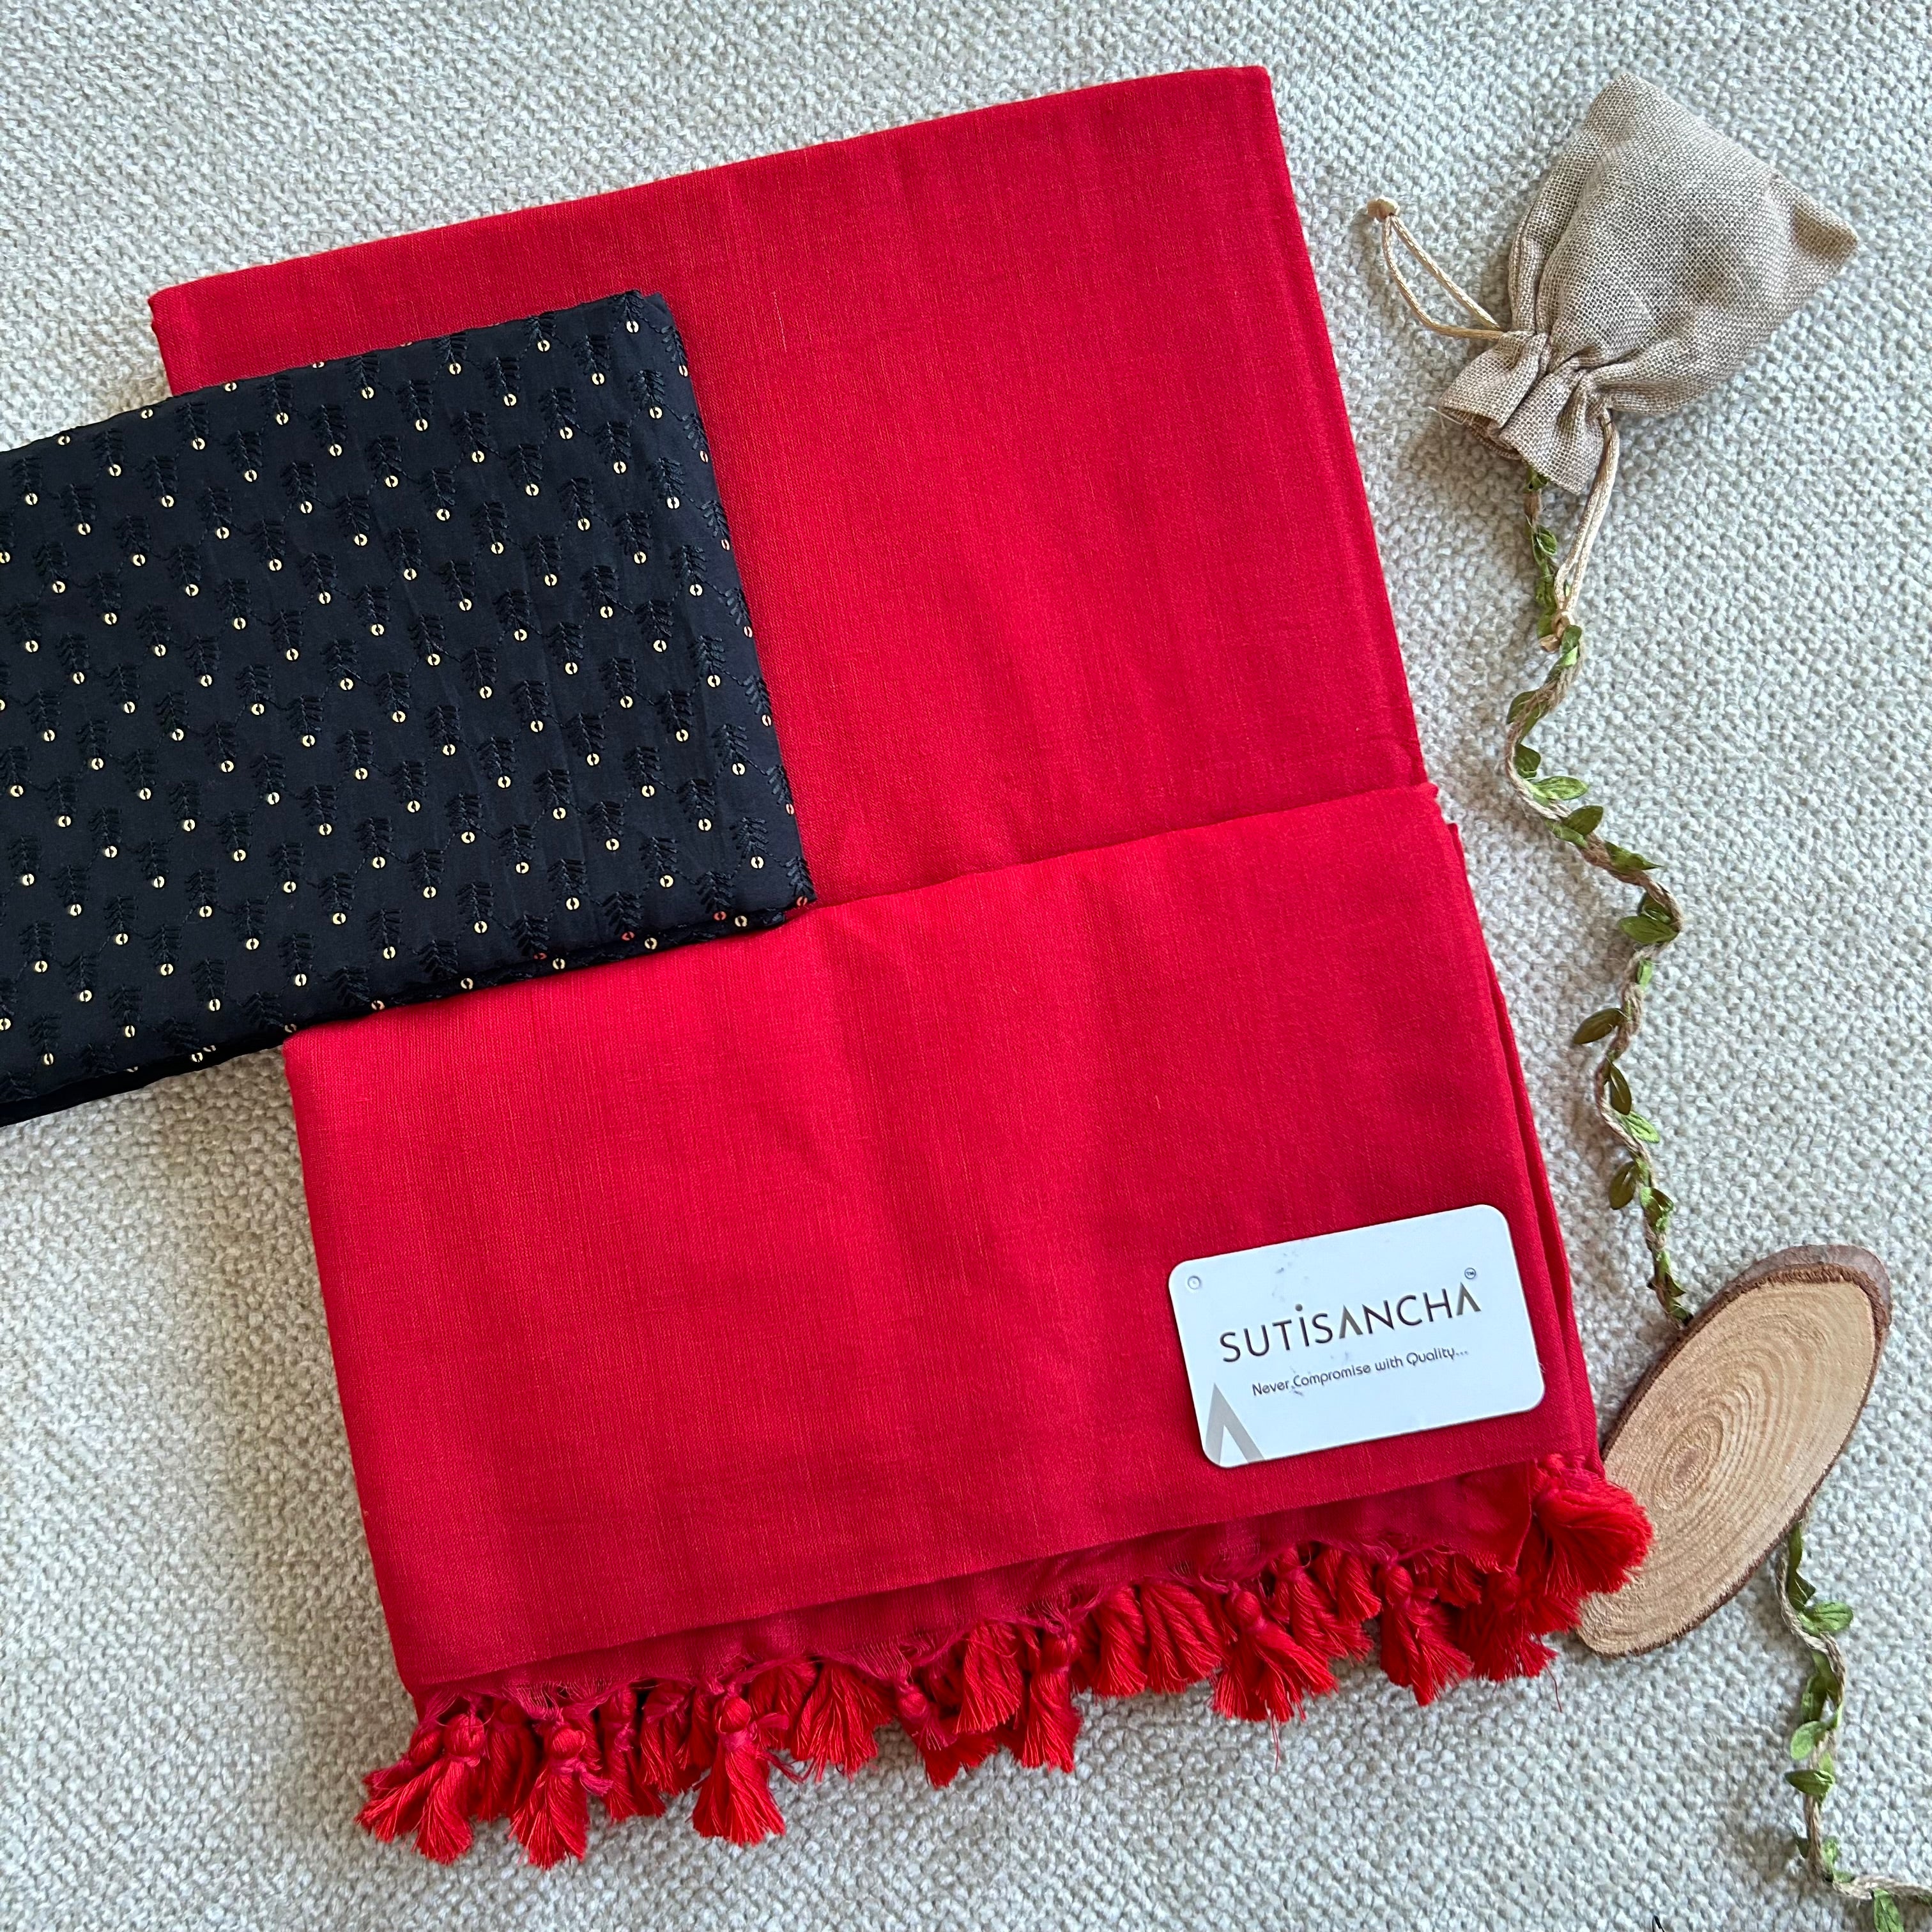 Sutisancha Red colour Handloom Cotton Saree with Designer Work Blouse